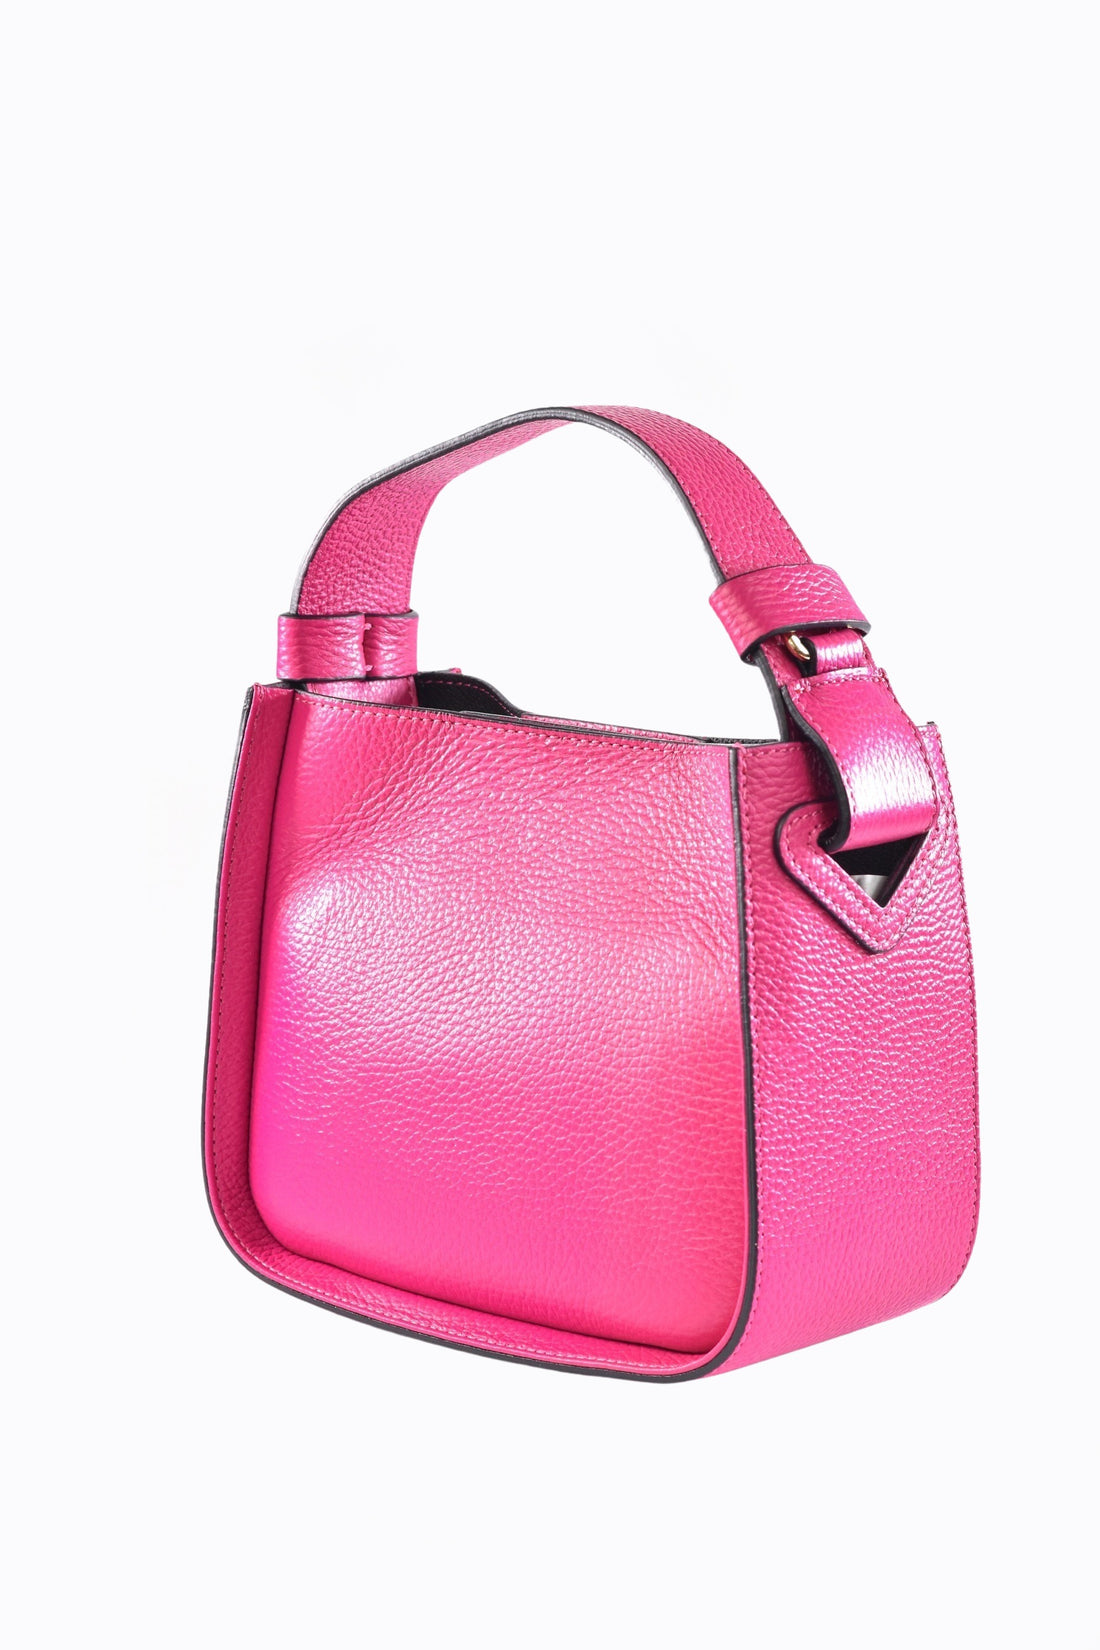 Kendall bag in Fuchsia Dollar leather